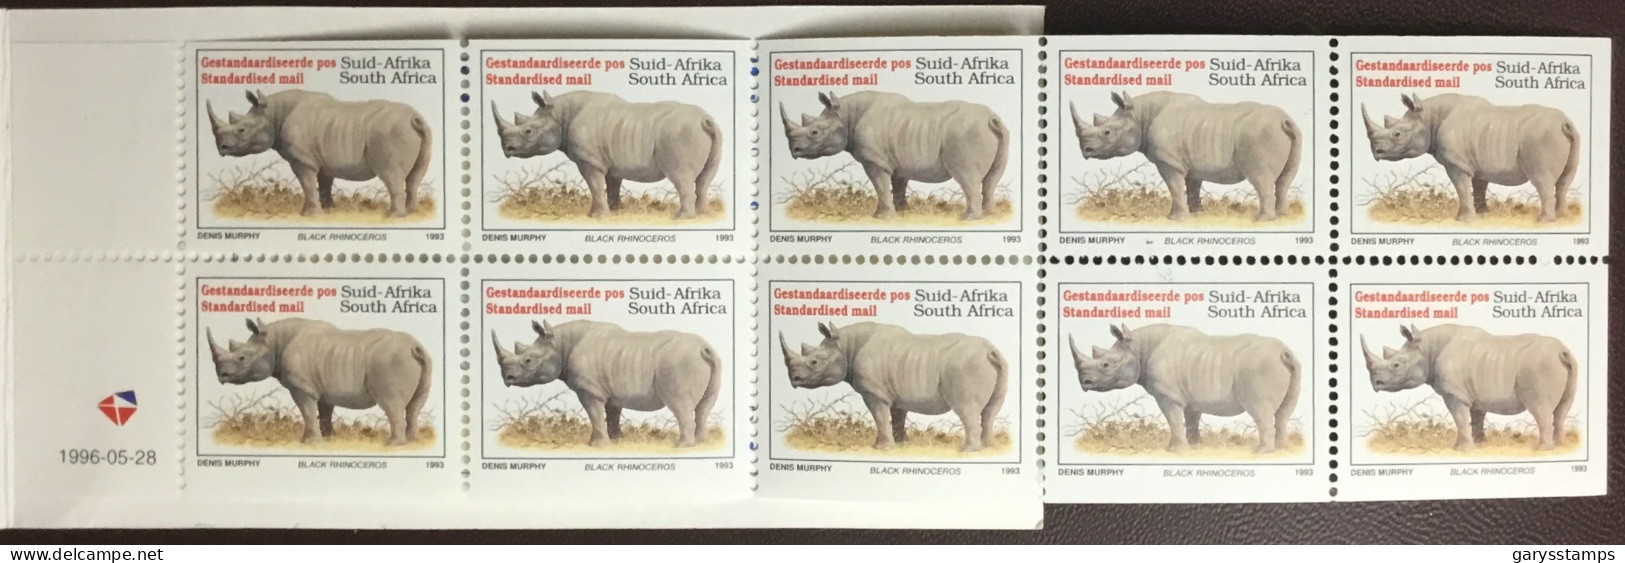 South Africa 1995 Standardised Mail Rhino Animals Booklet Unused - Rhinoceros